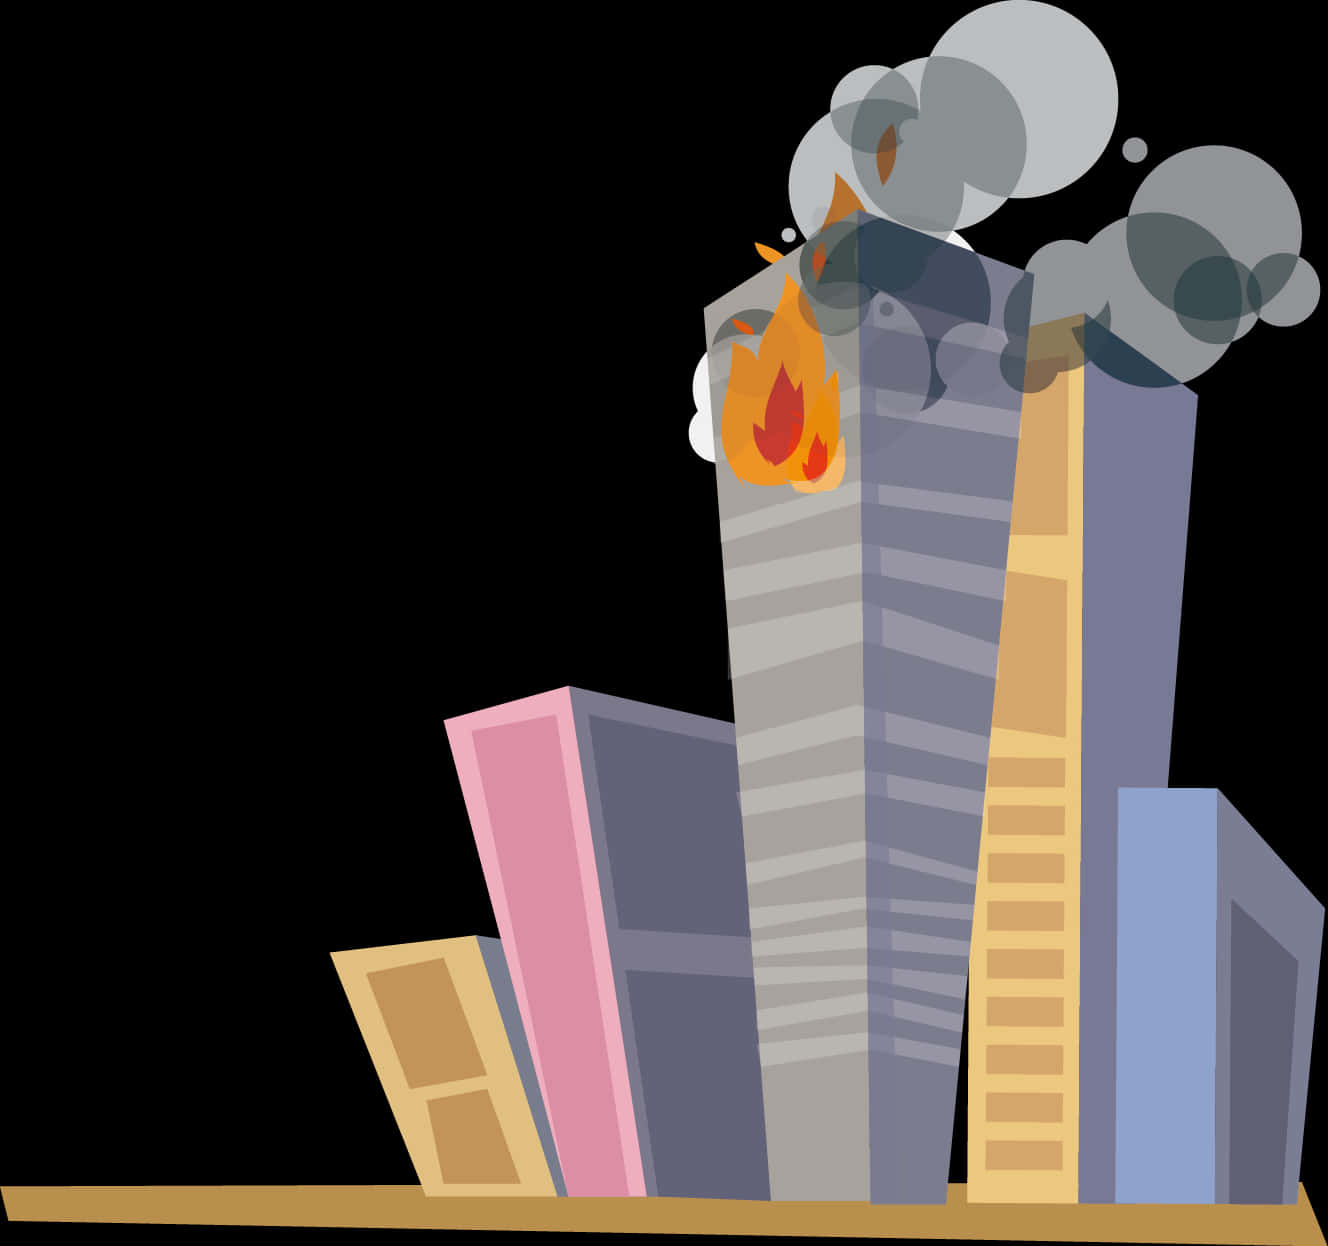 Skyscraper Fire Cartoon Illustration